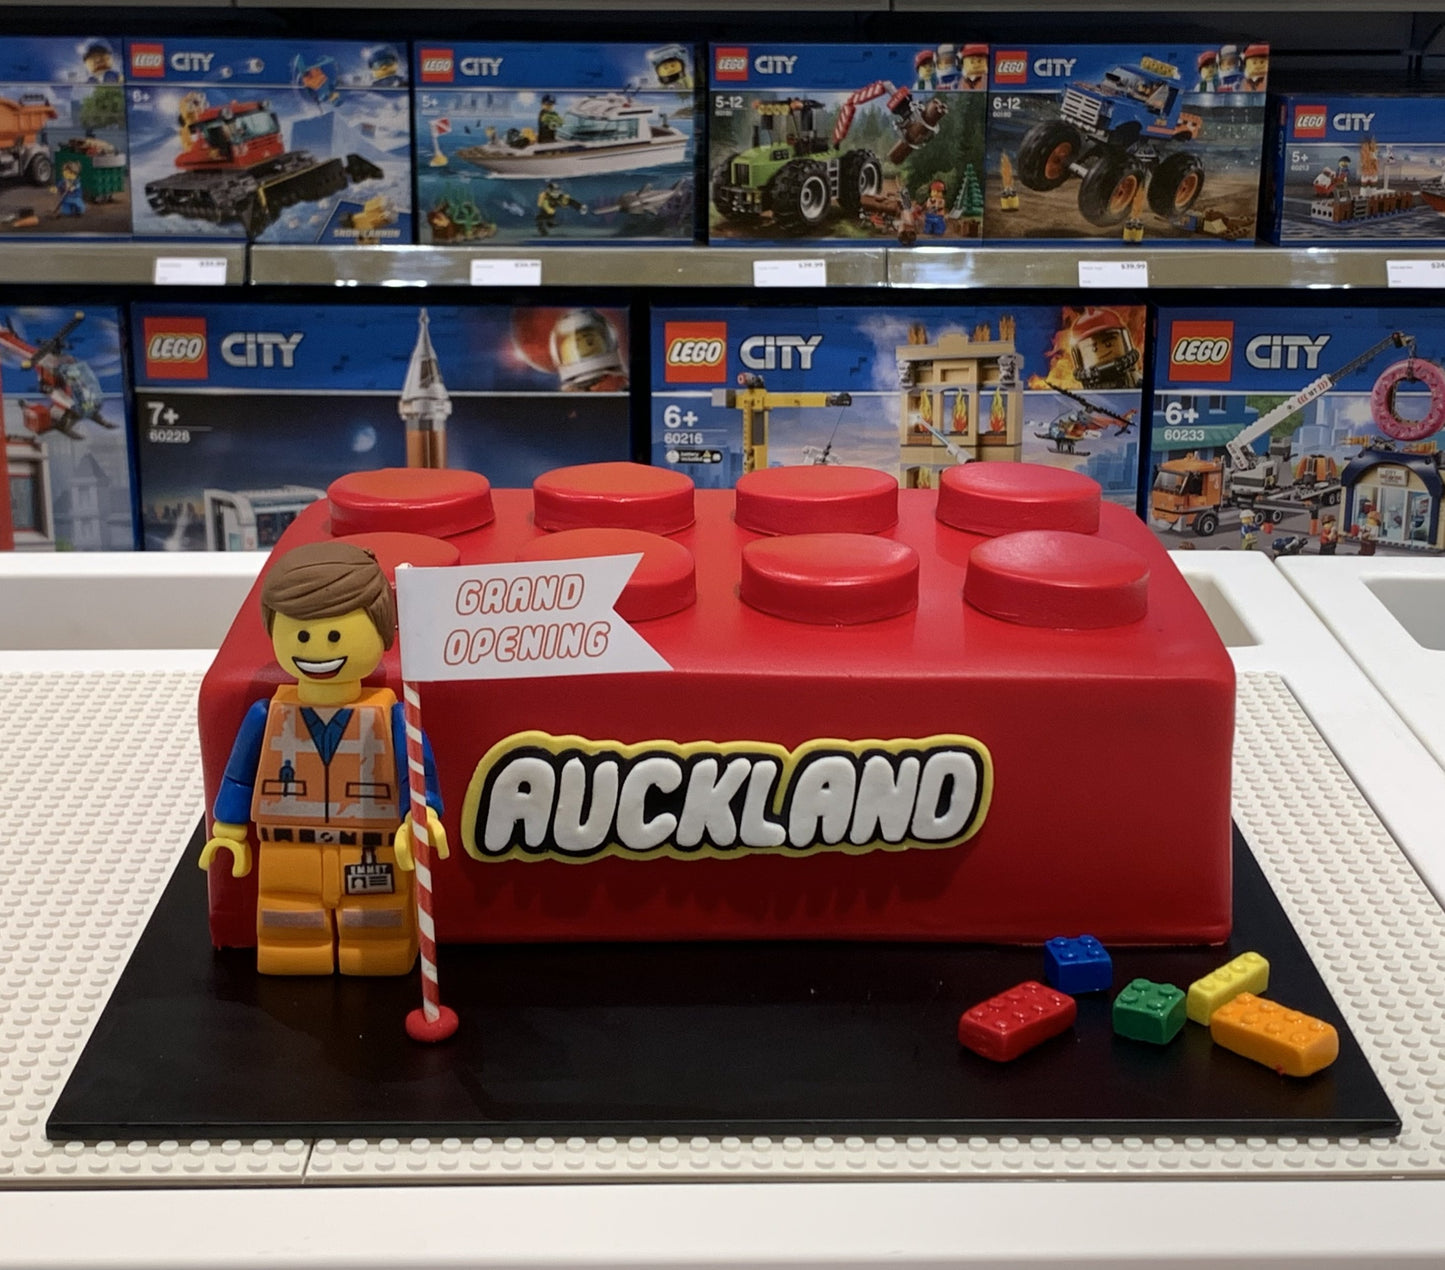 Lego Store Opening Cake & Cupcakes